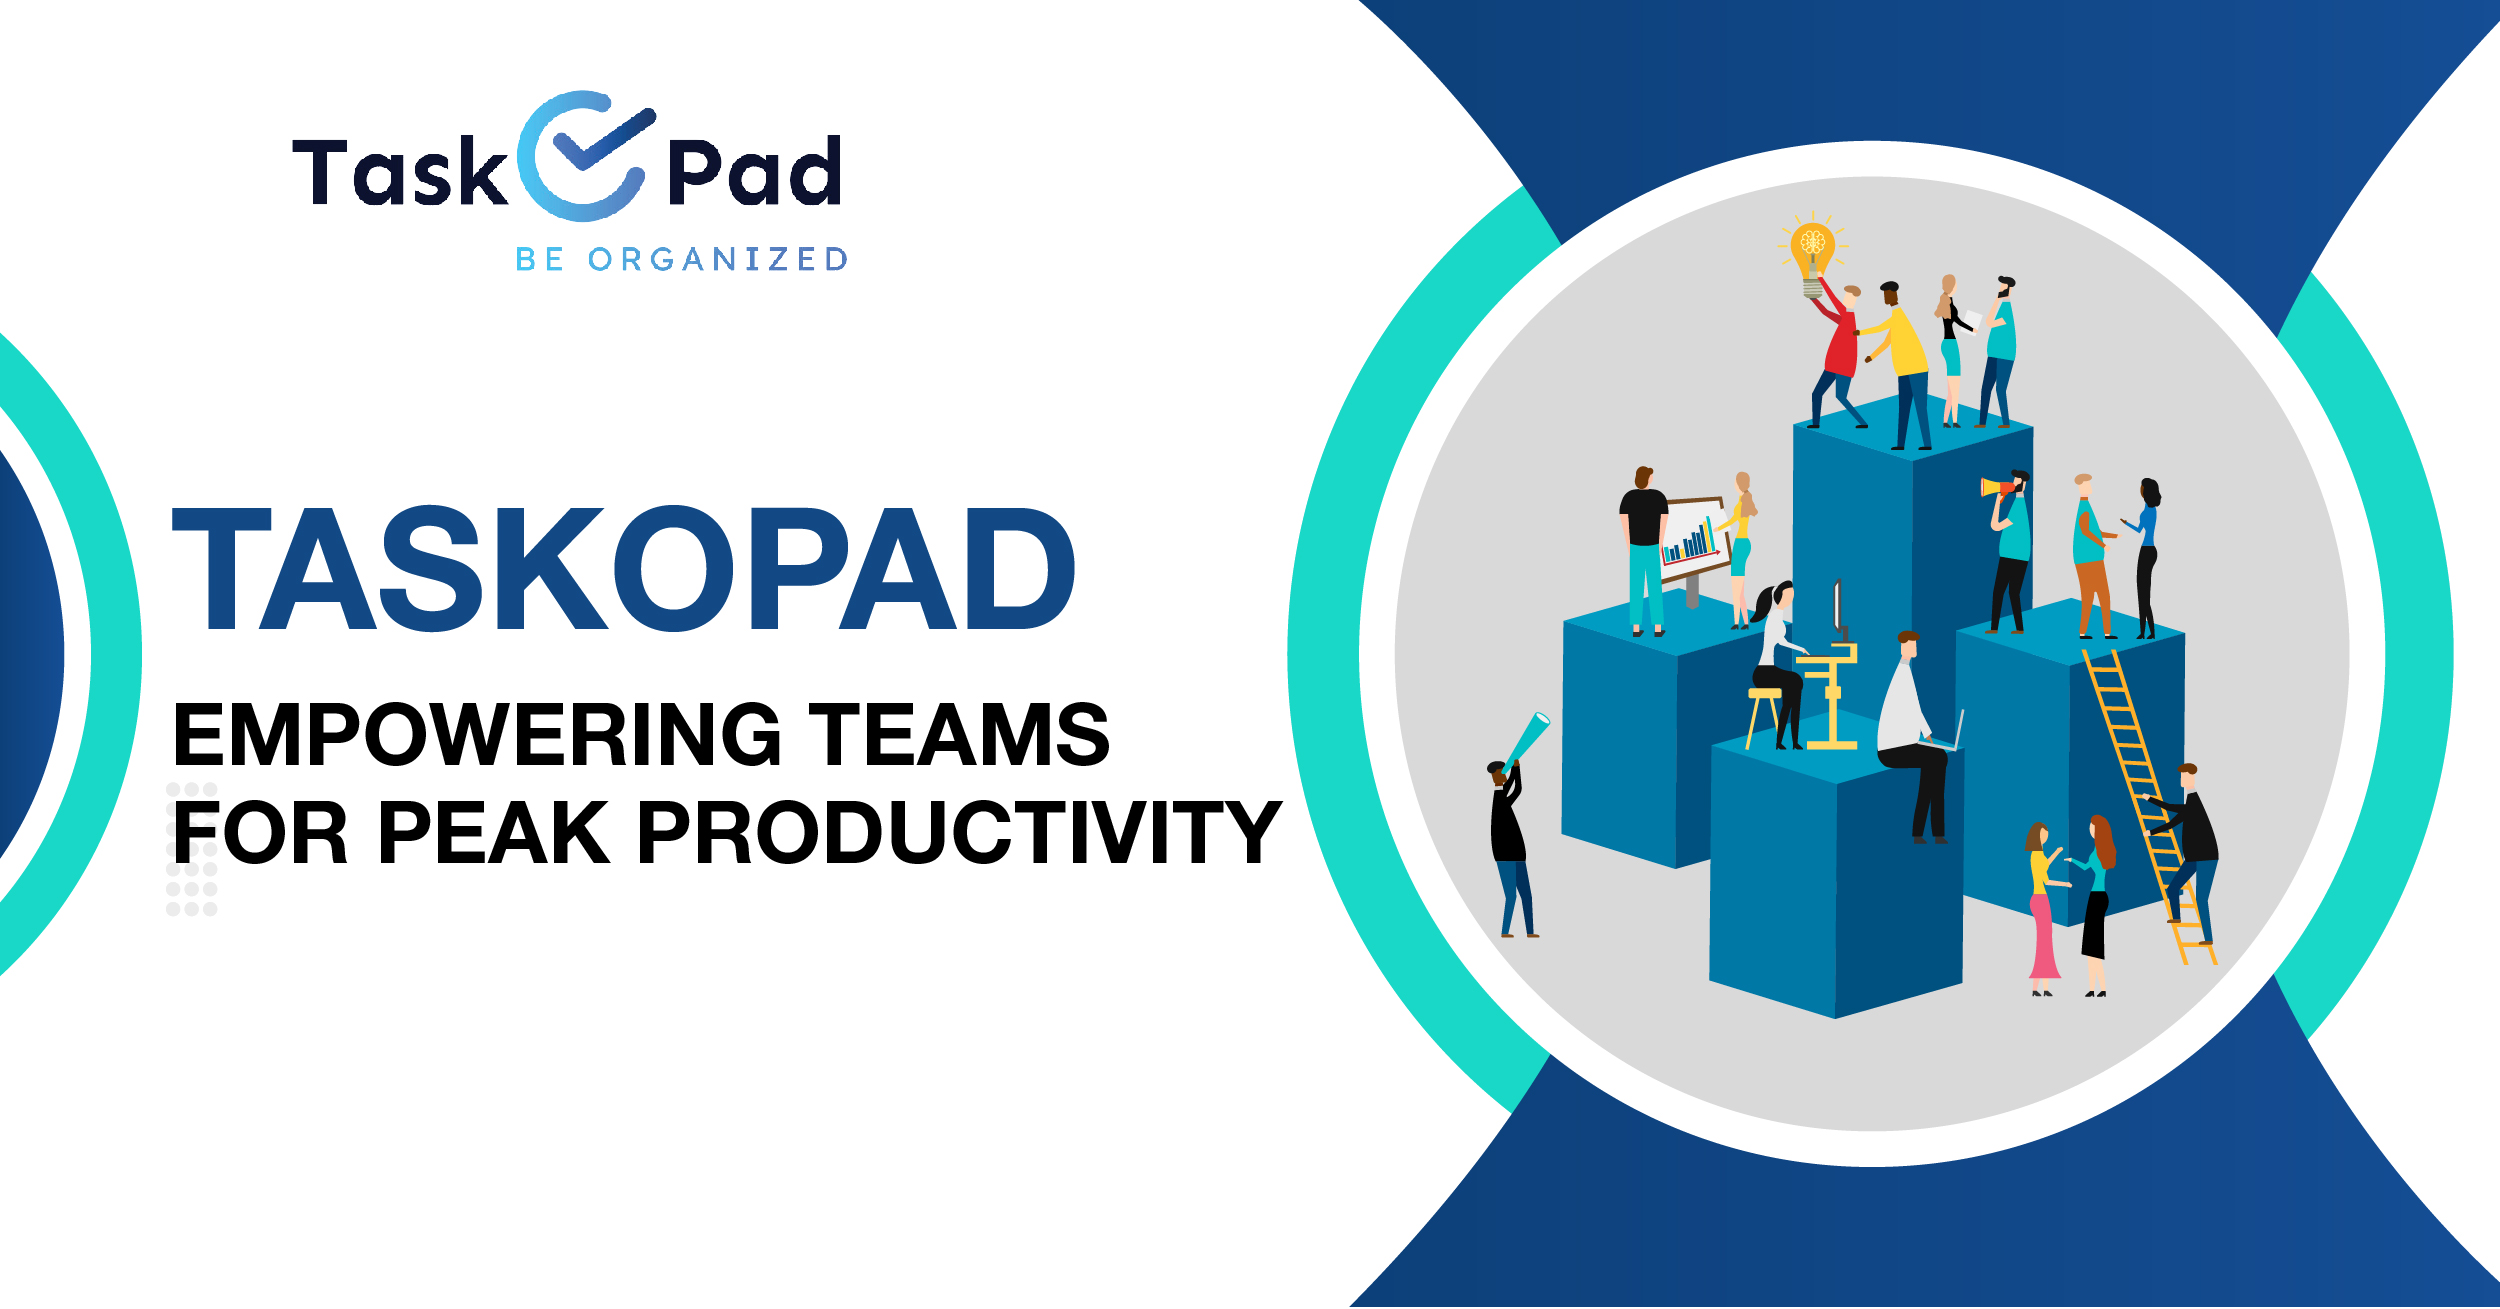 Taskopad: Empowering Teams for Peak Productivity